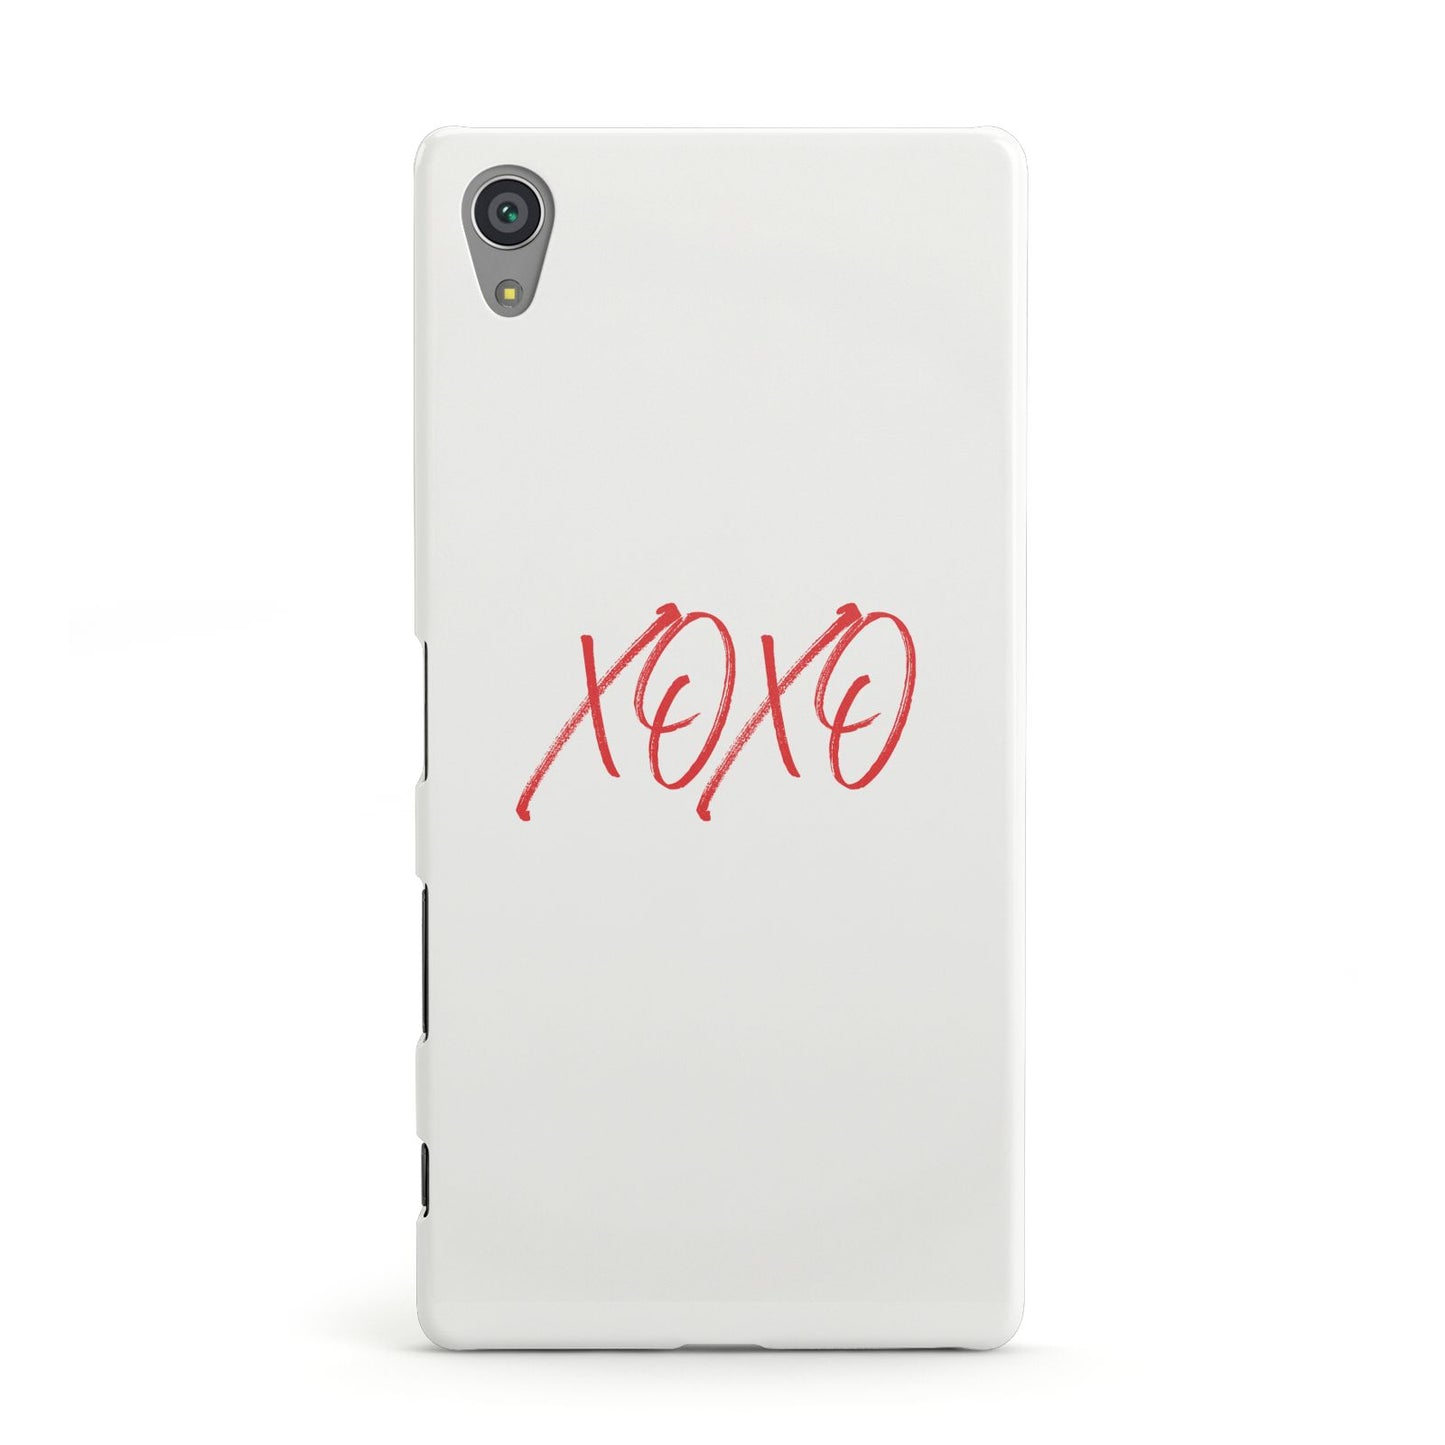 I love you like xo Sony Xperia Case